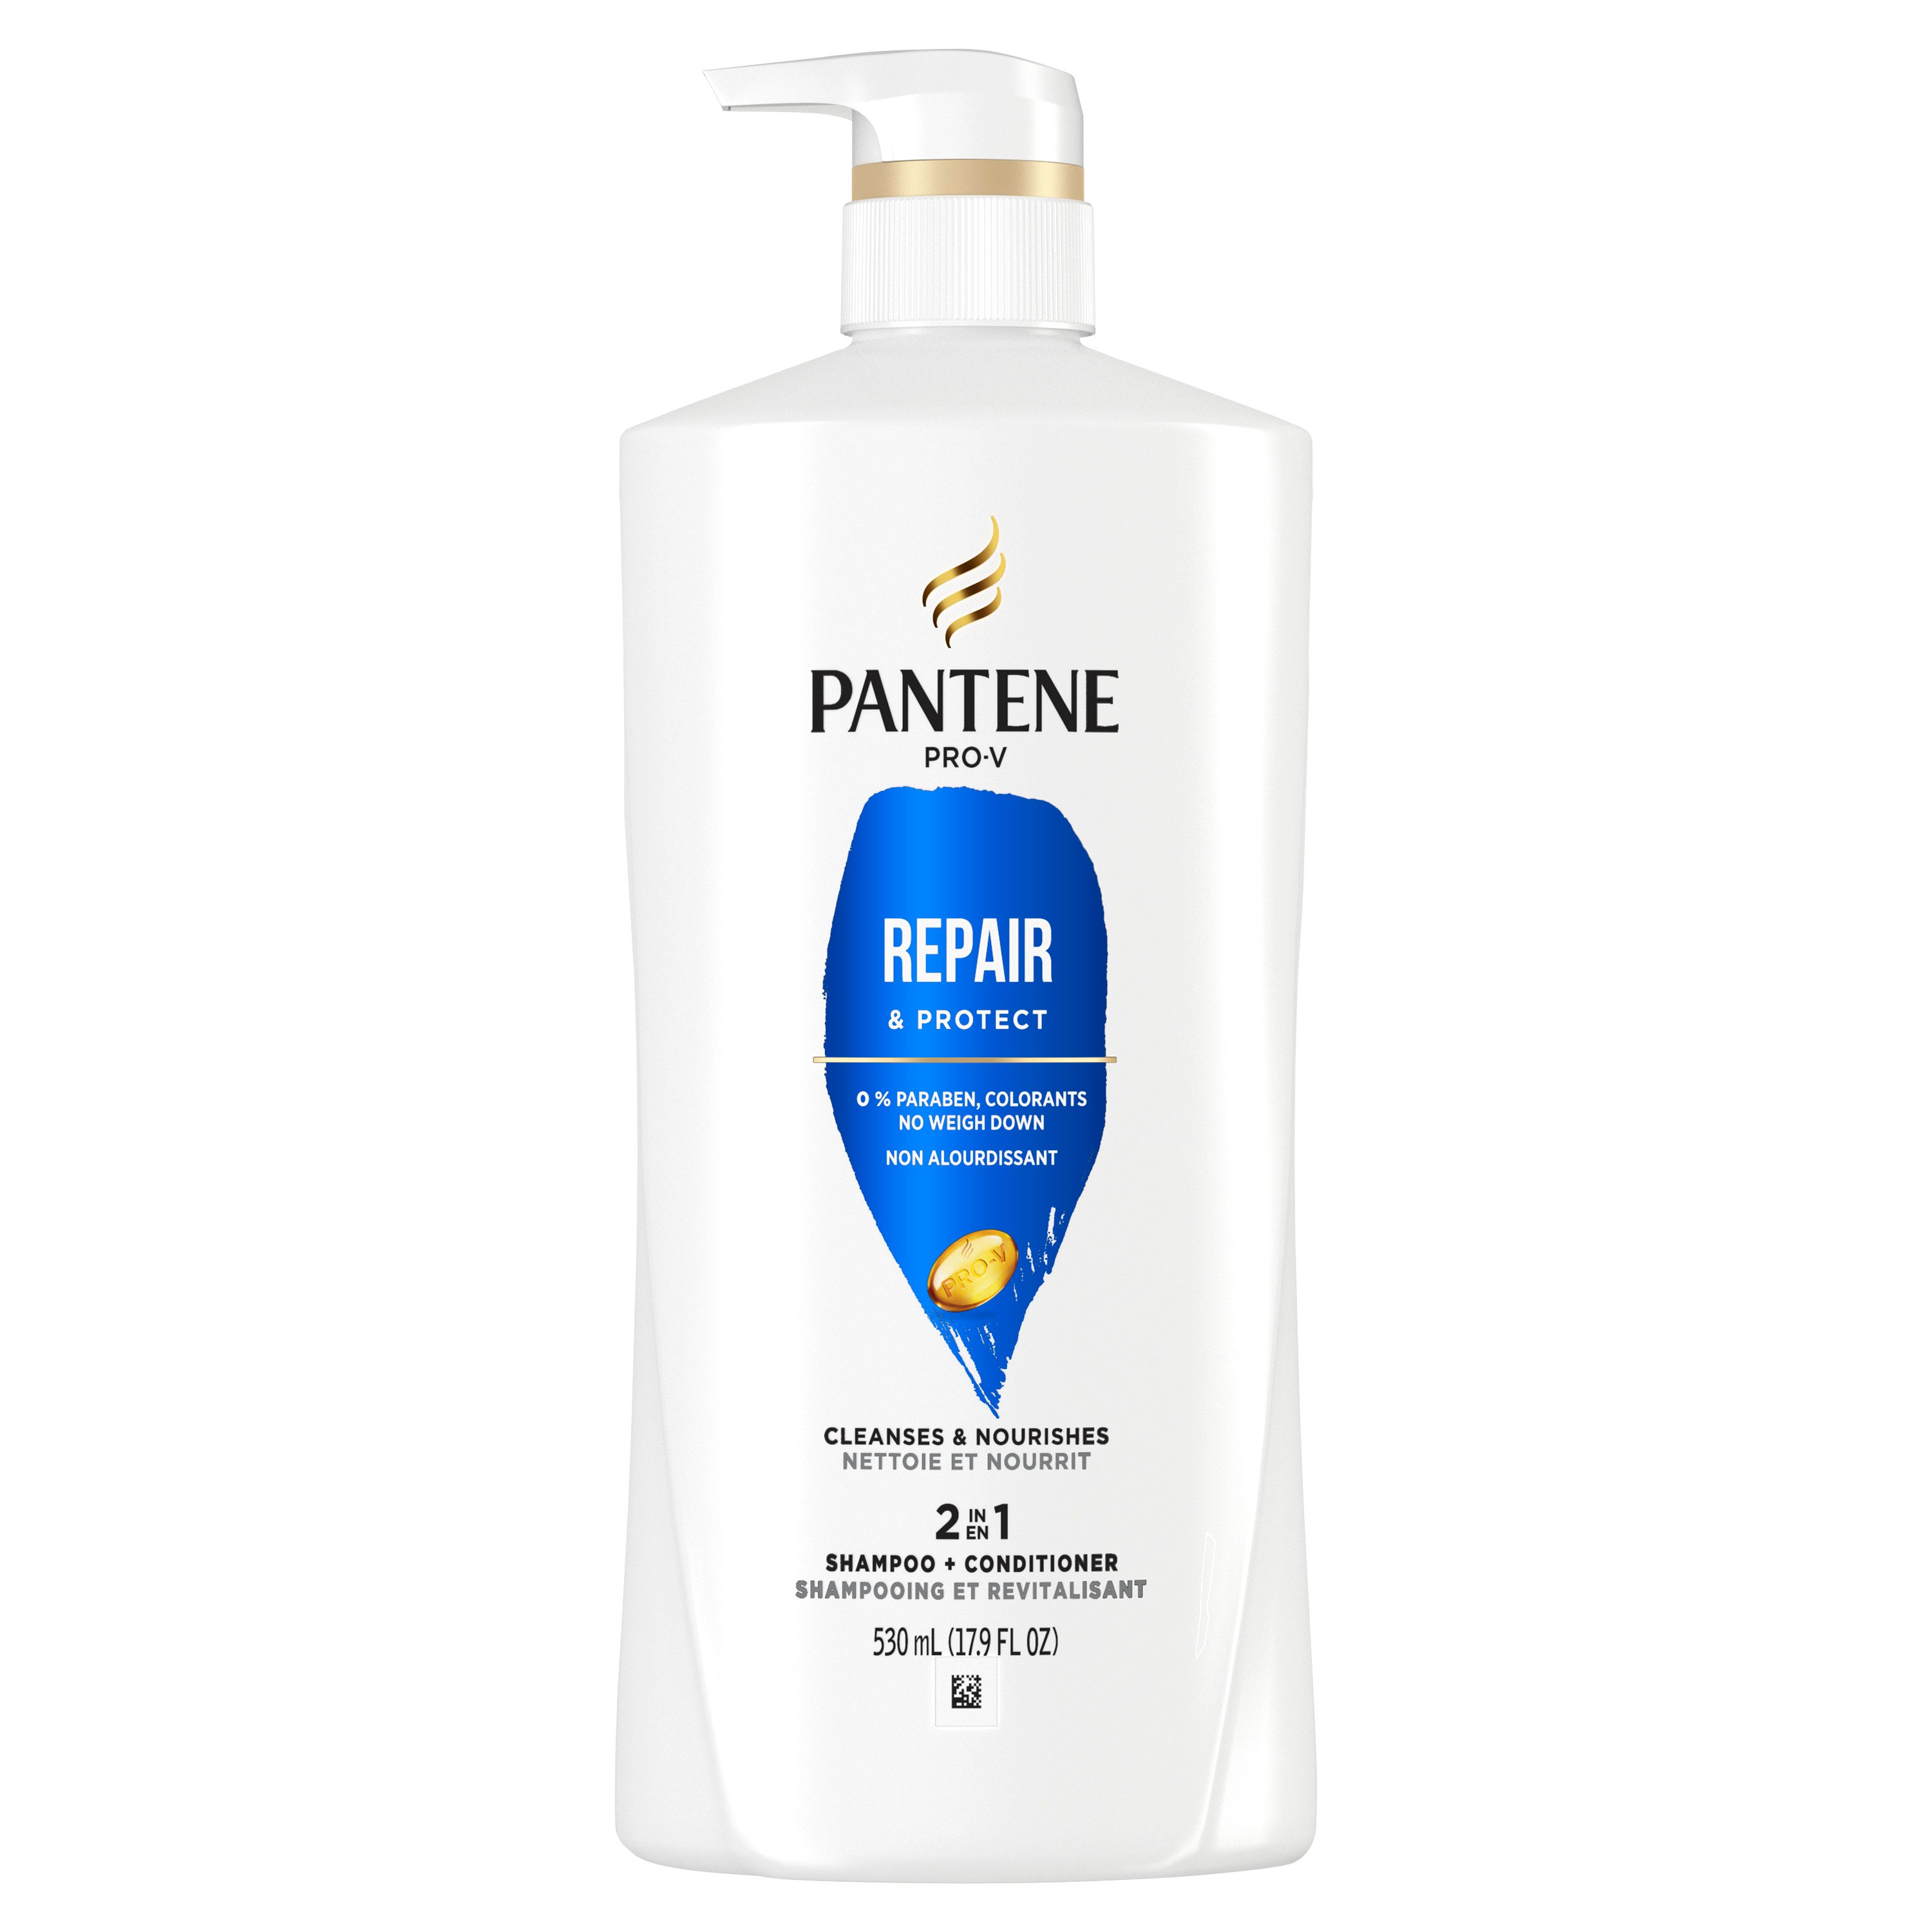 Pantene Pro-V Repair & Protect 2 in 1 Shampoo + Conditioner - Shop Shampoo  & Conditioner at H-E-B